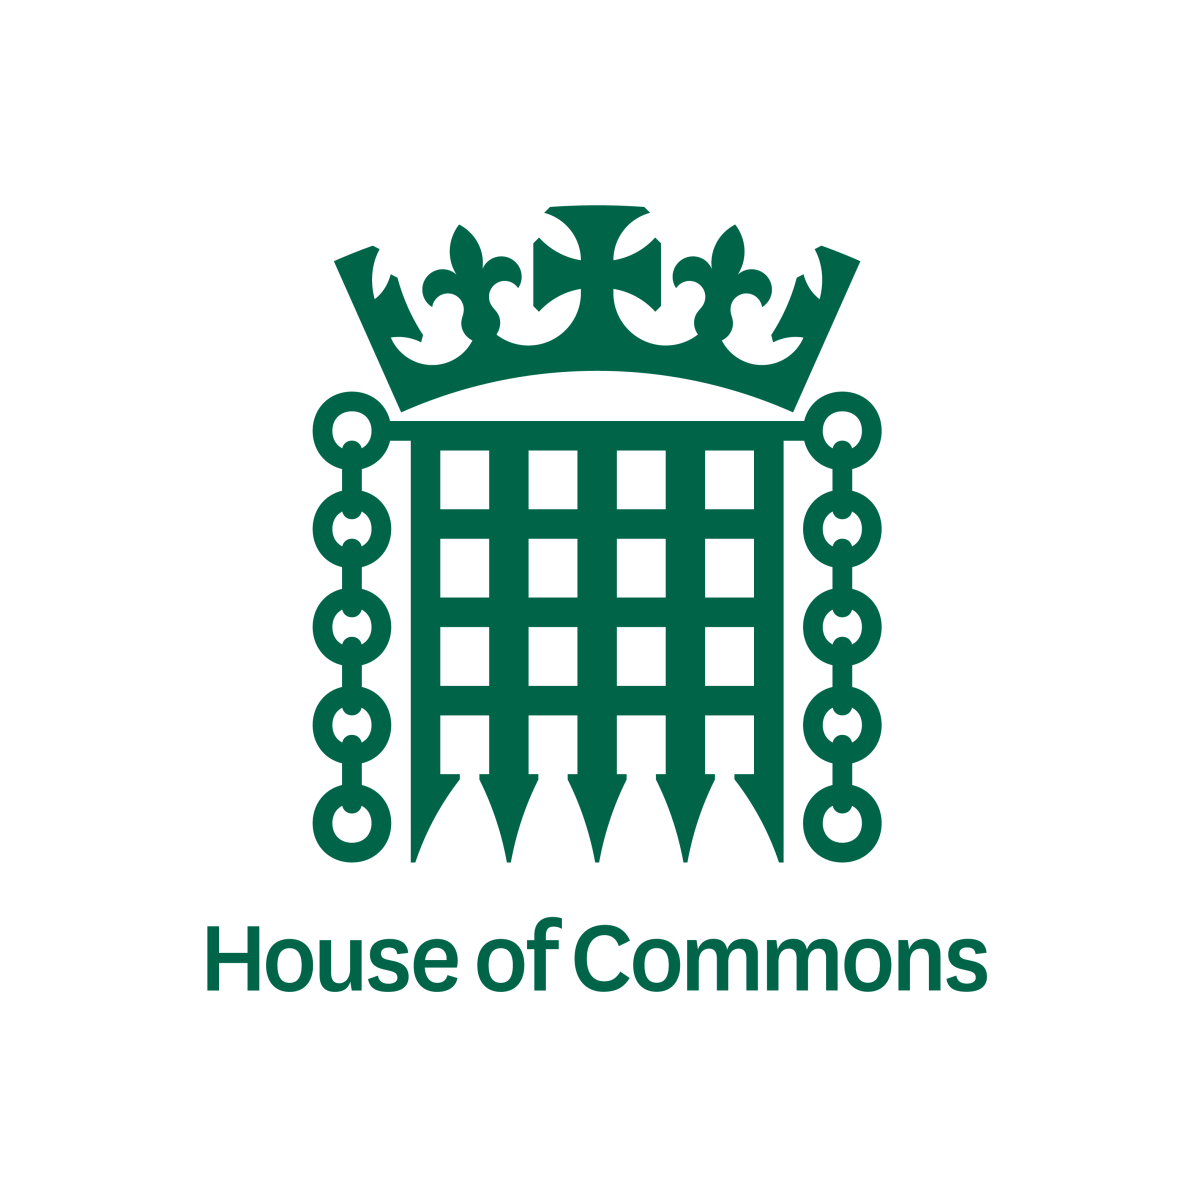 2 the house of commons. Палата общин эмблема. Герб палаты общин. House of Commons Великобритании. House of Commons logo.